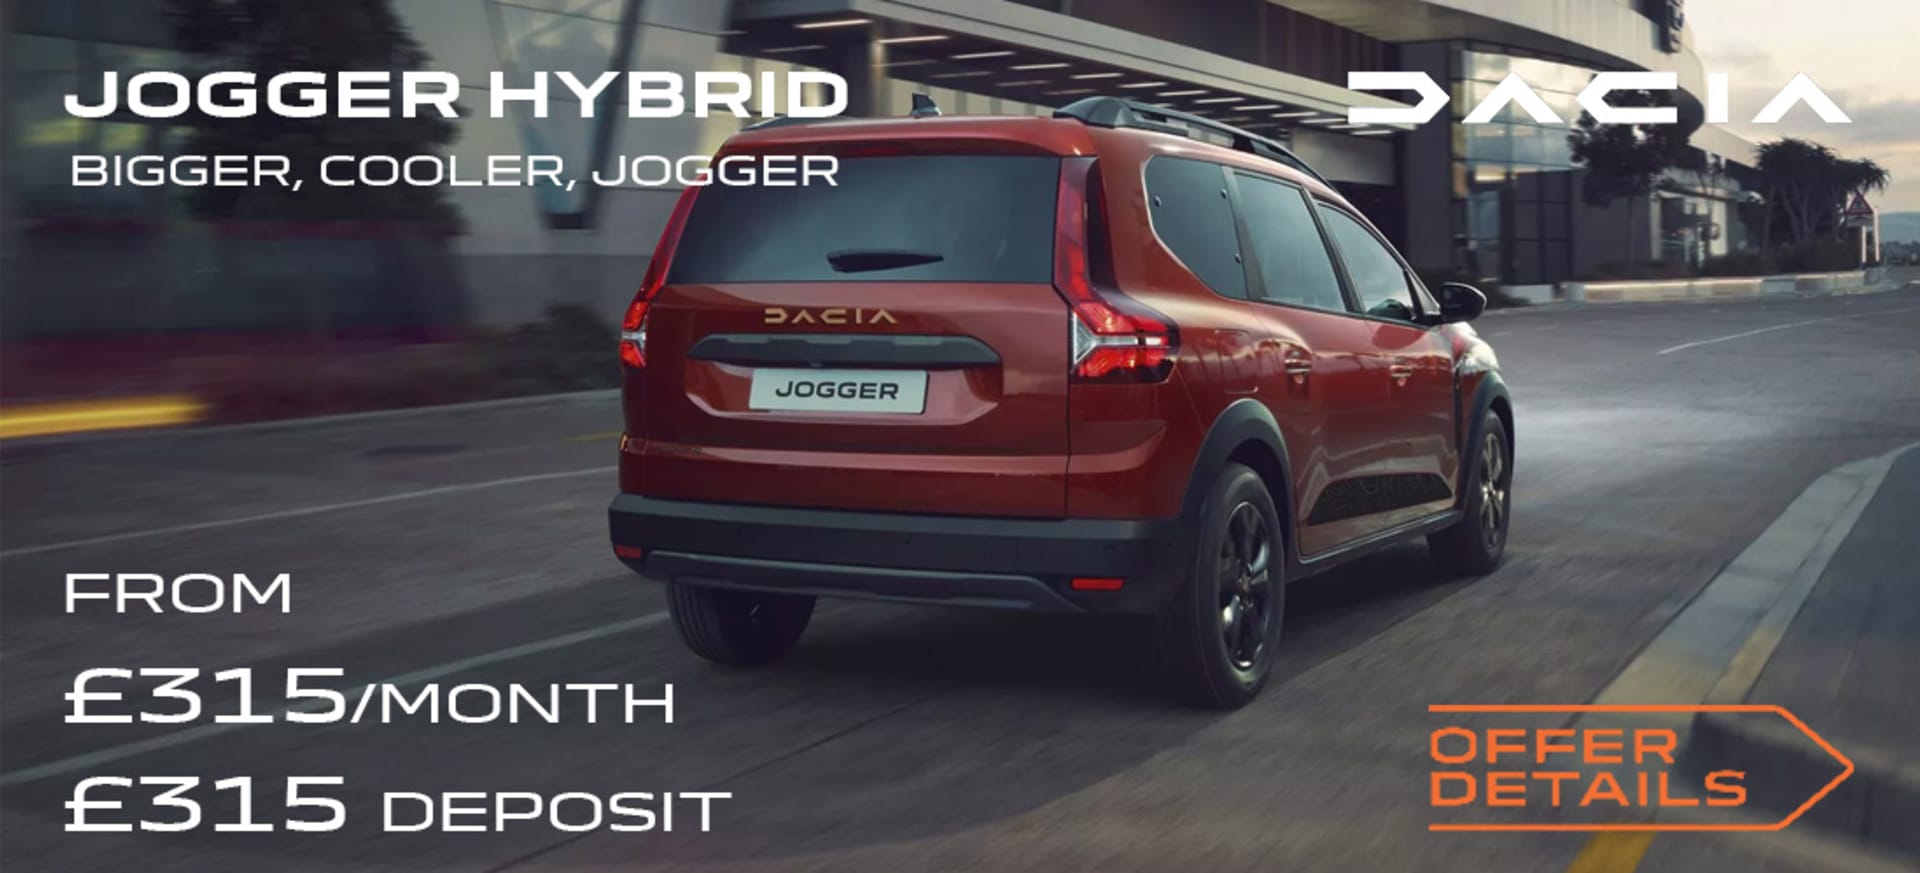 Dacia Jogger Hybrid Offers